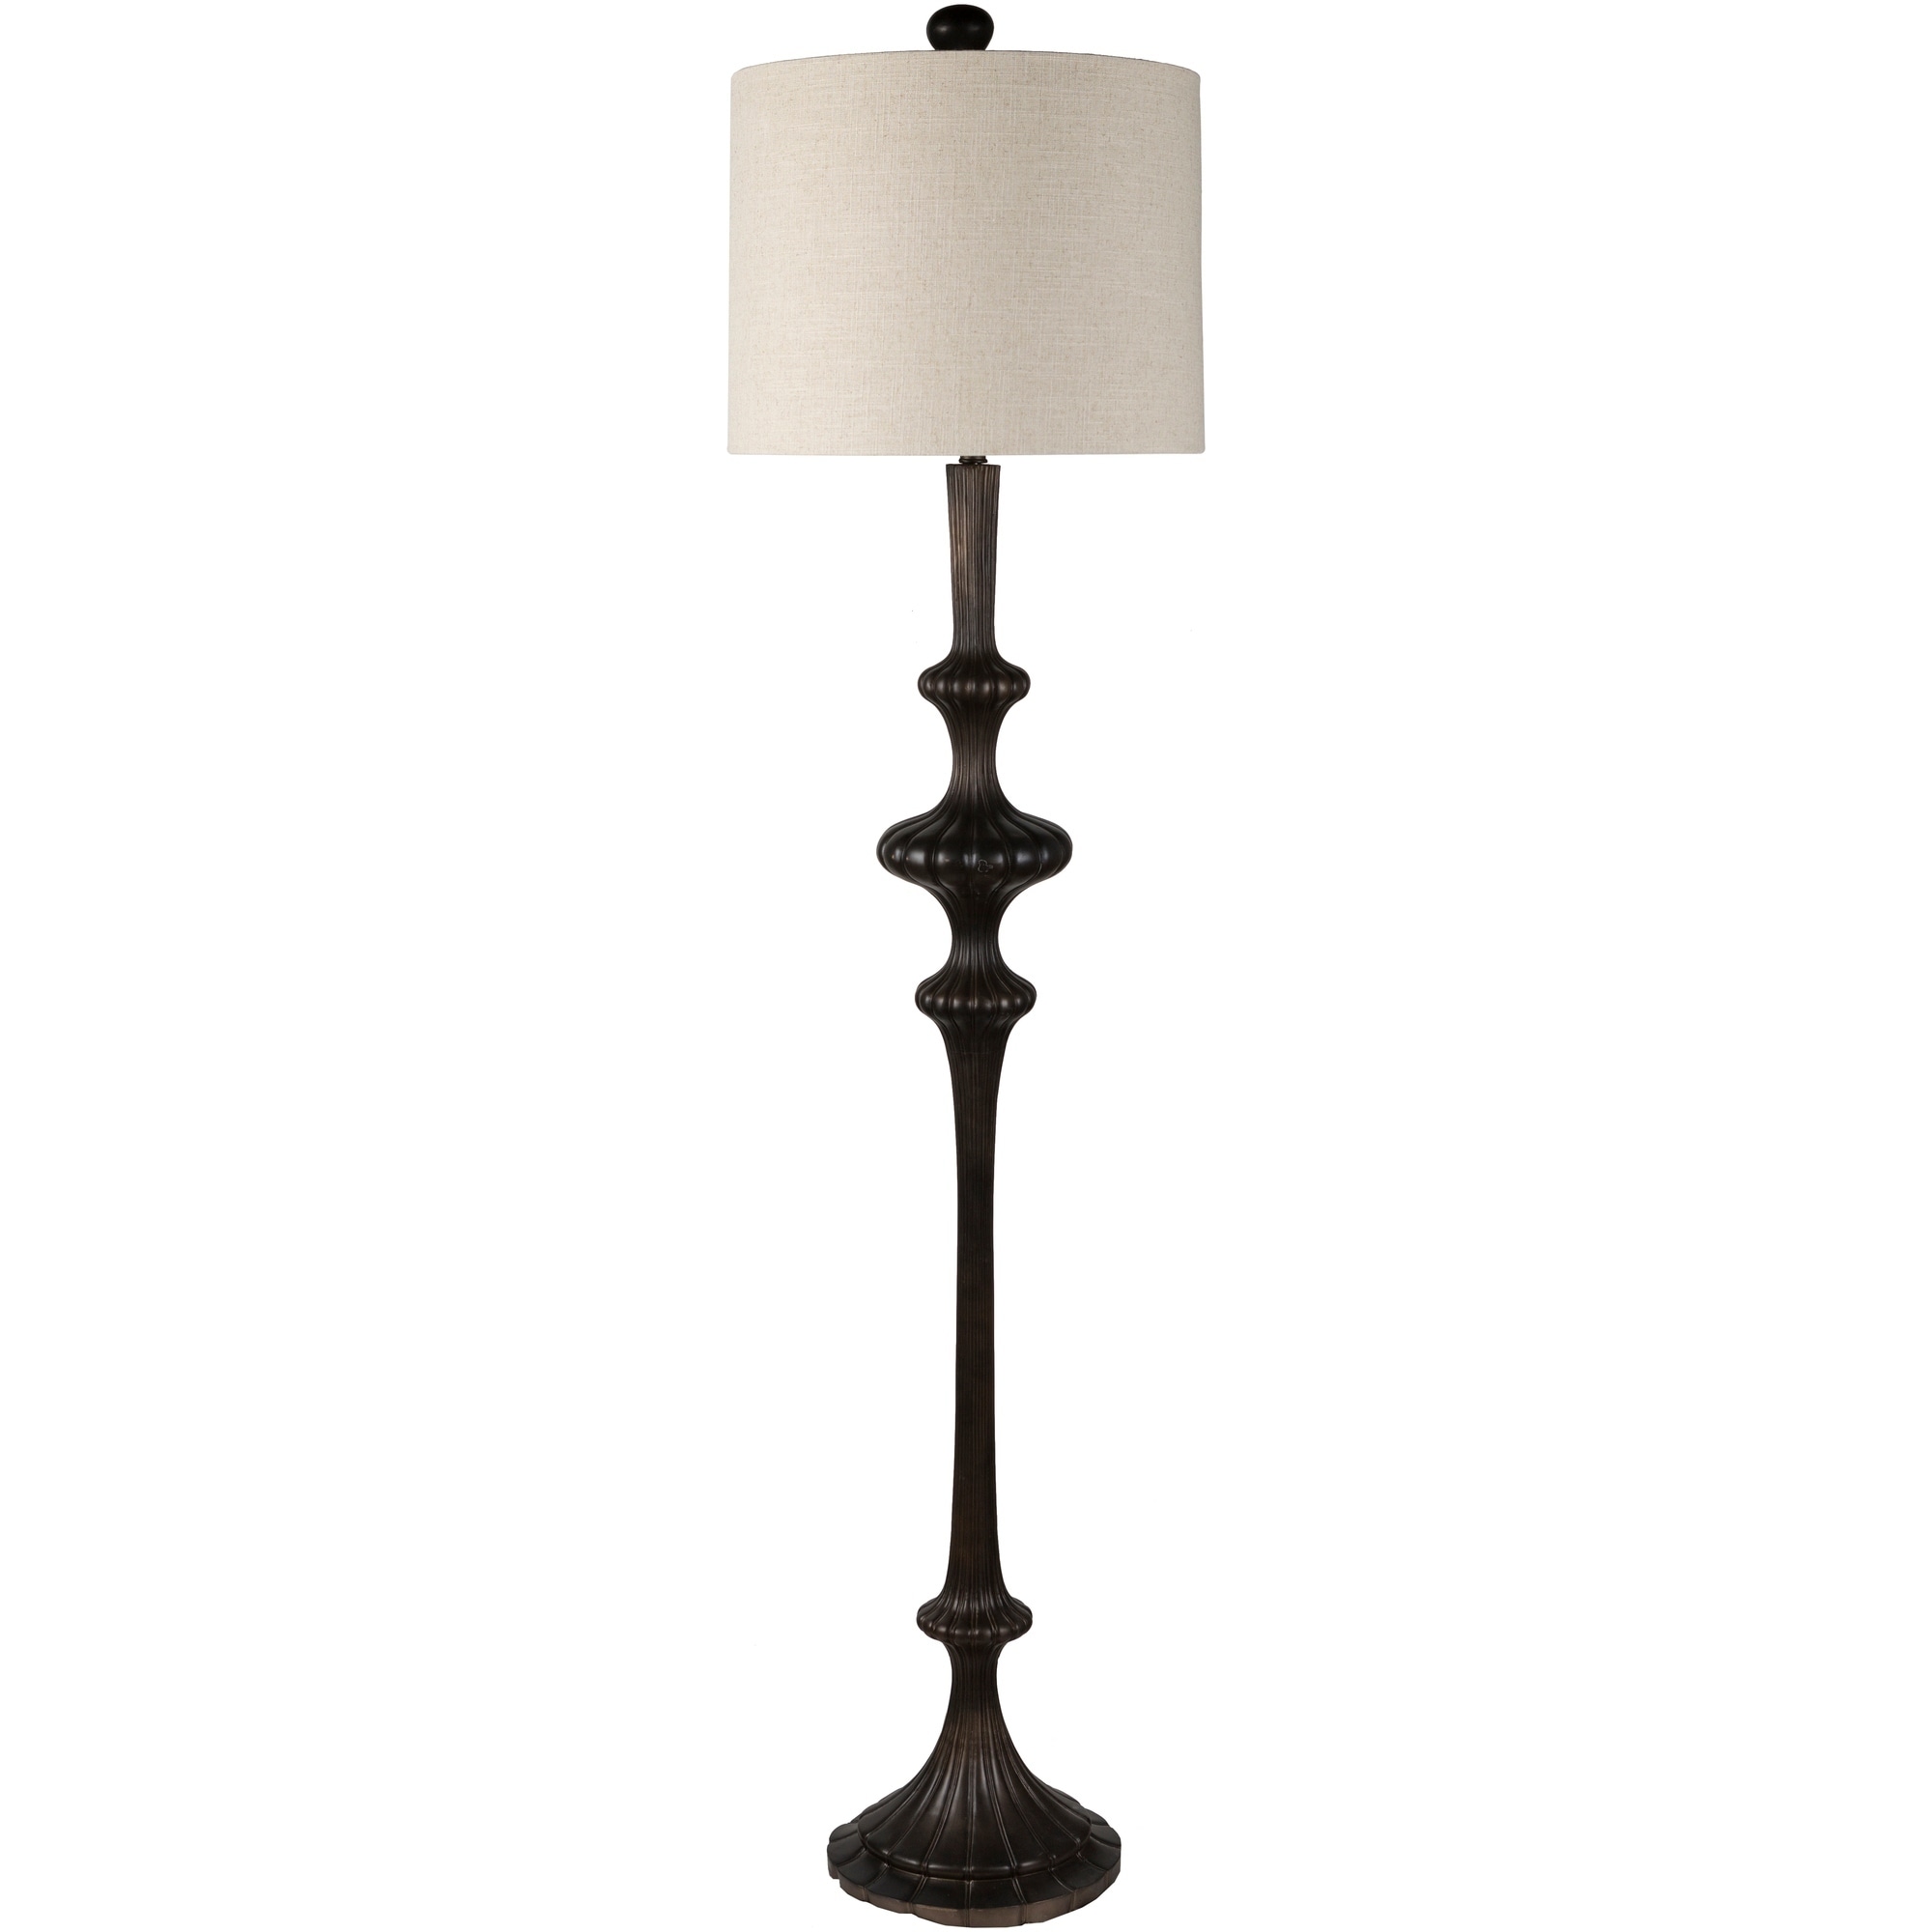 Clean Classic Bronze Charm Lamp